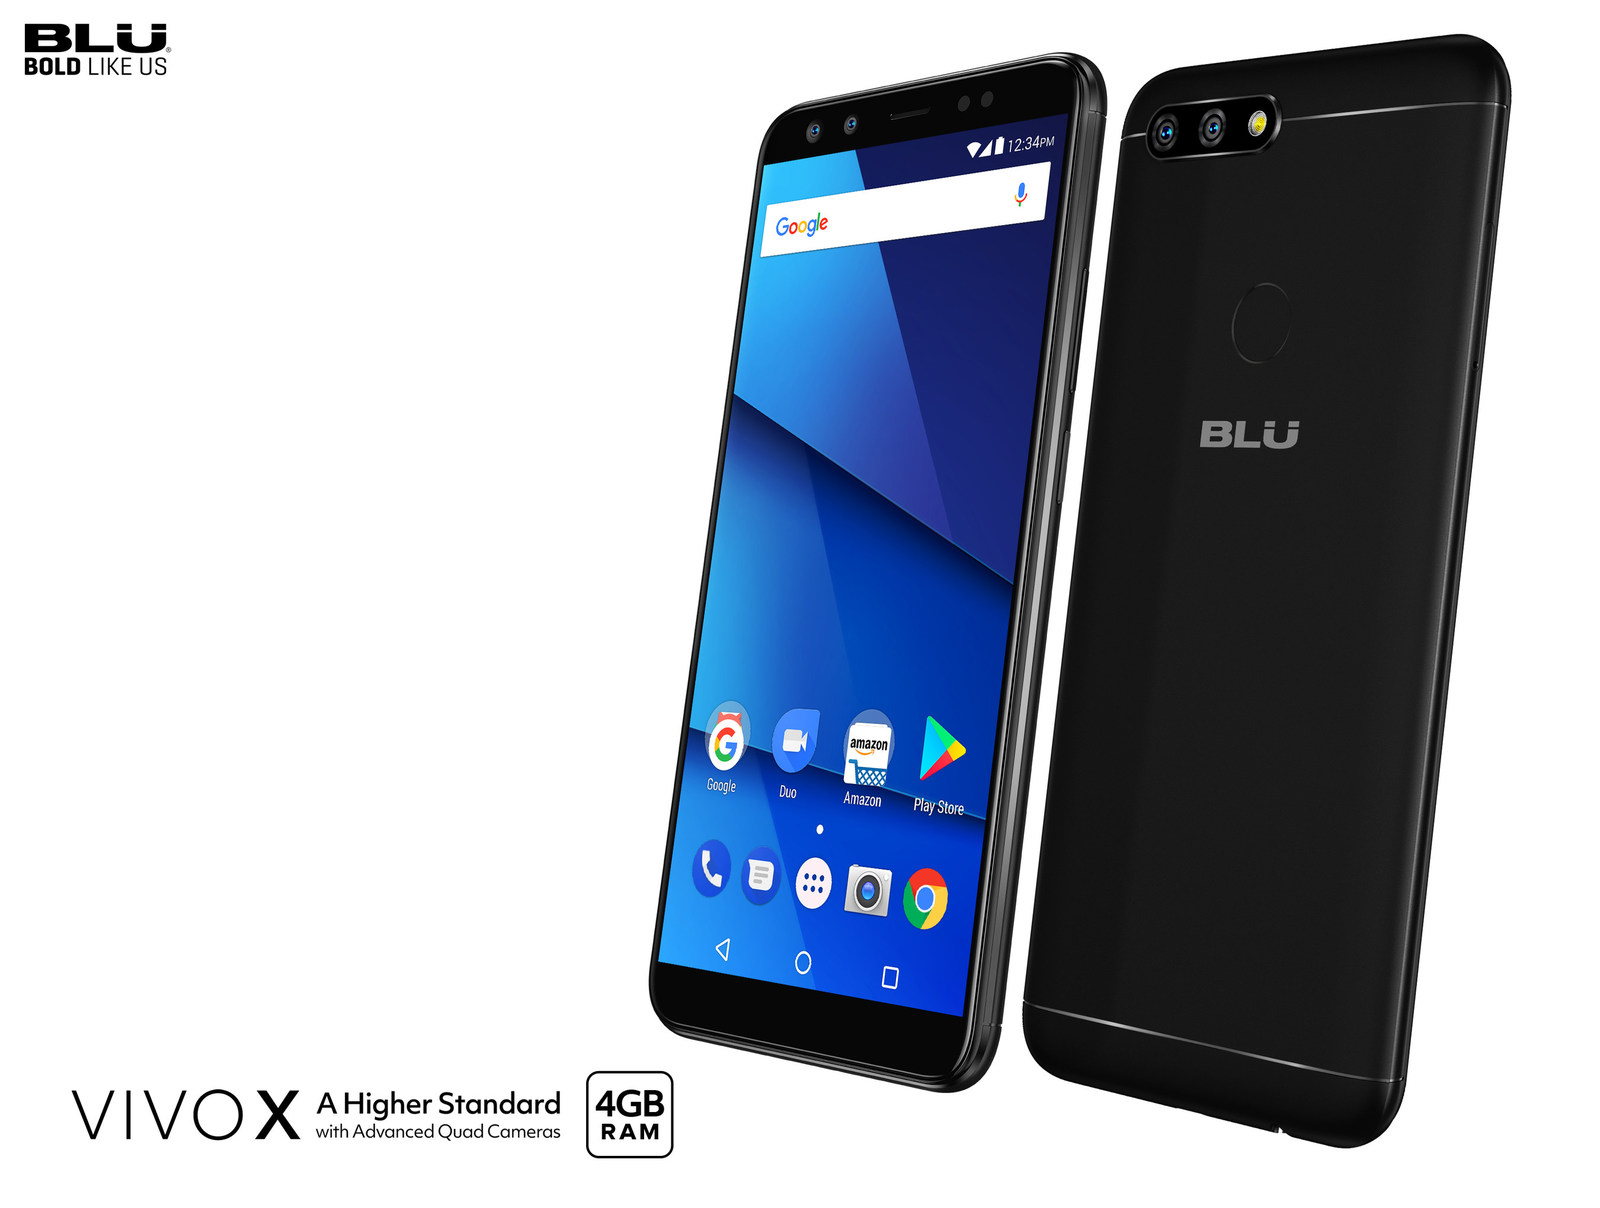 BLU Products Announces Its Latest Flagship Phone the BLU VIVO X Tech